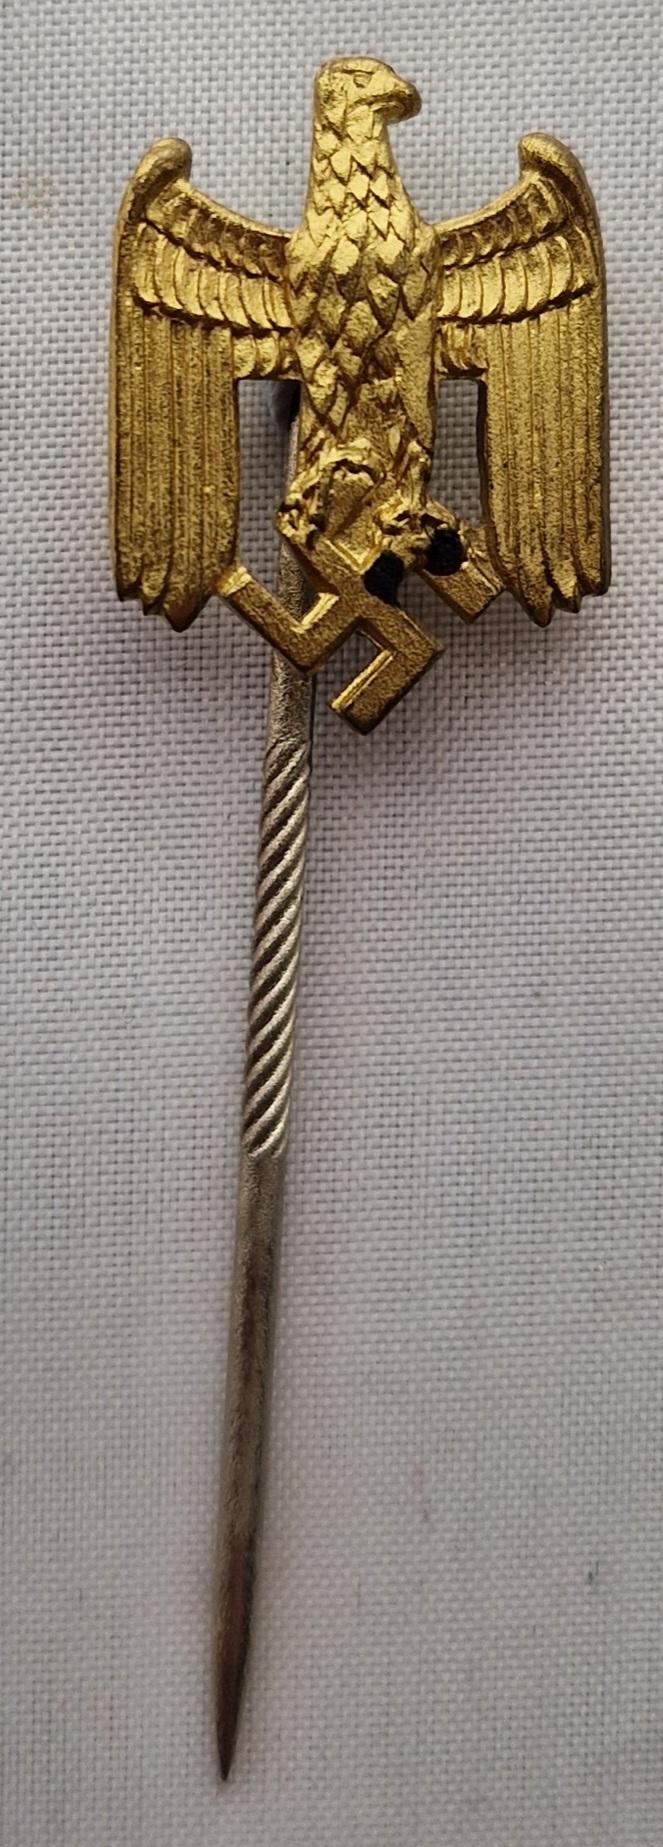 Wehrmacht eagle and swastika stickpin